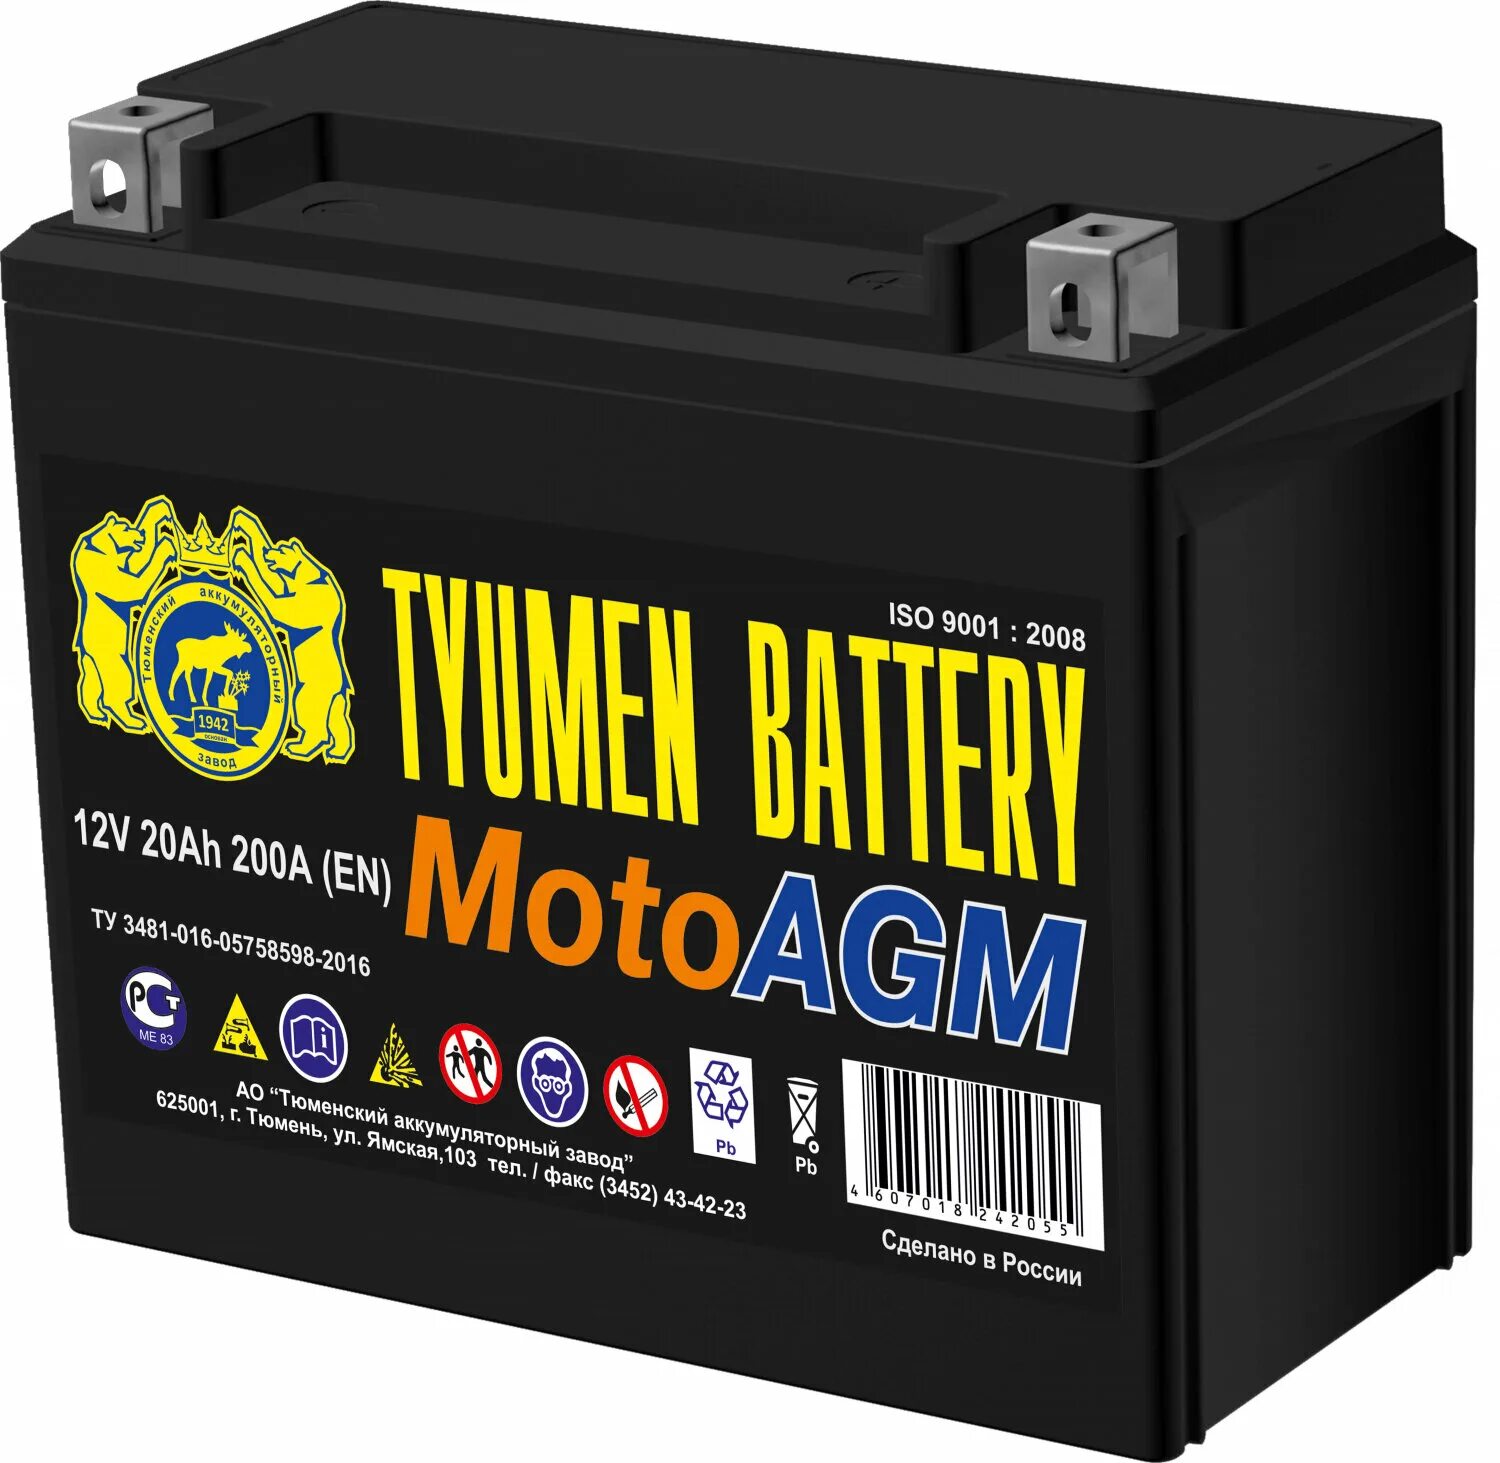 Тюмень батарея купить. Мото аккумулятор Тюмень AGM 9 А.Ч 6мтс-9 (12 вольт. Аккумулятор Тюменский Moto AGM. Tyumen Battery 6мтс-20а AGM. 6мтс-20 AGM.